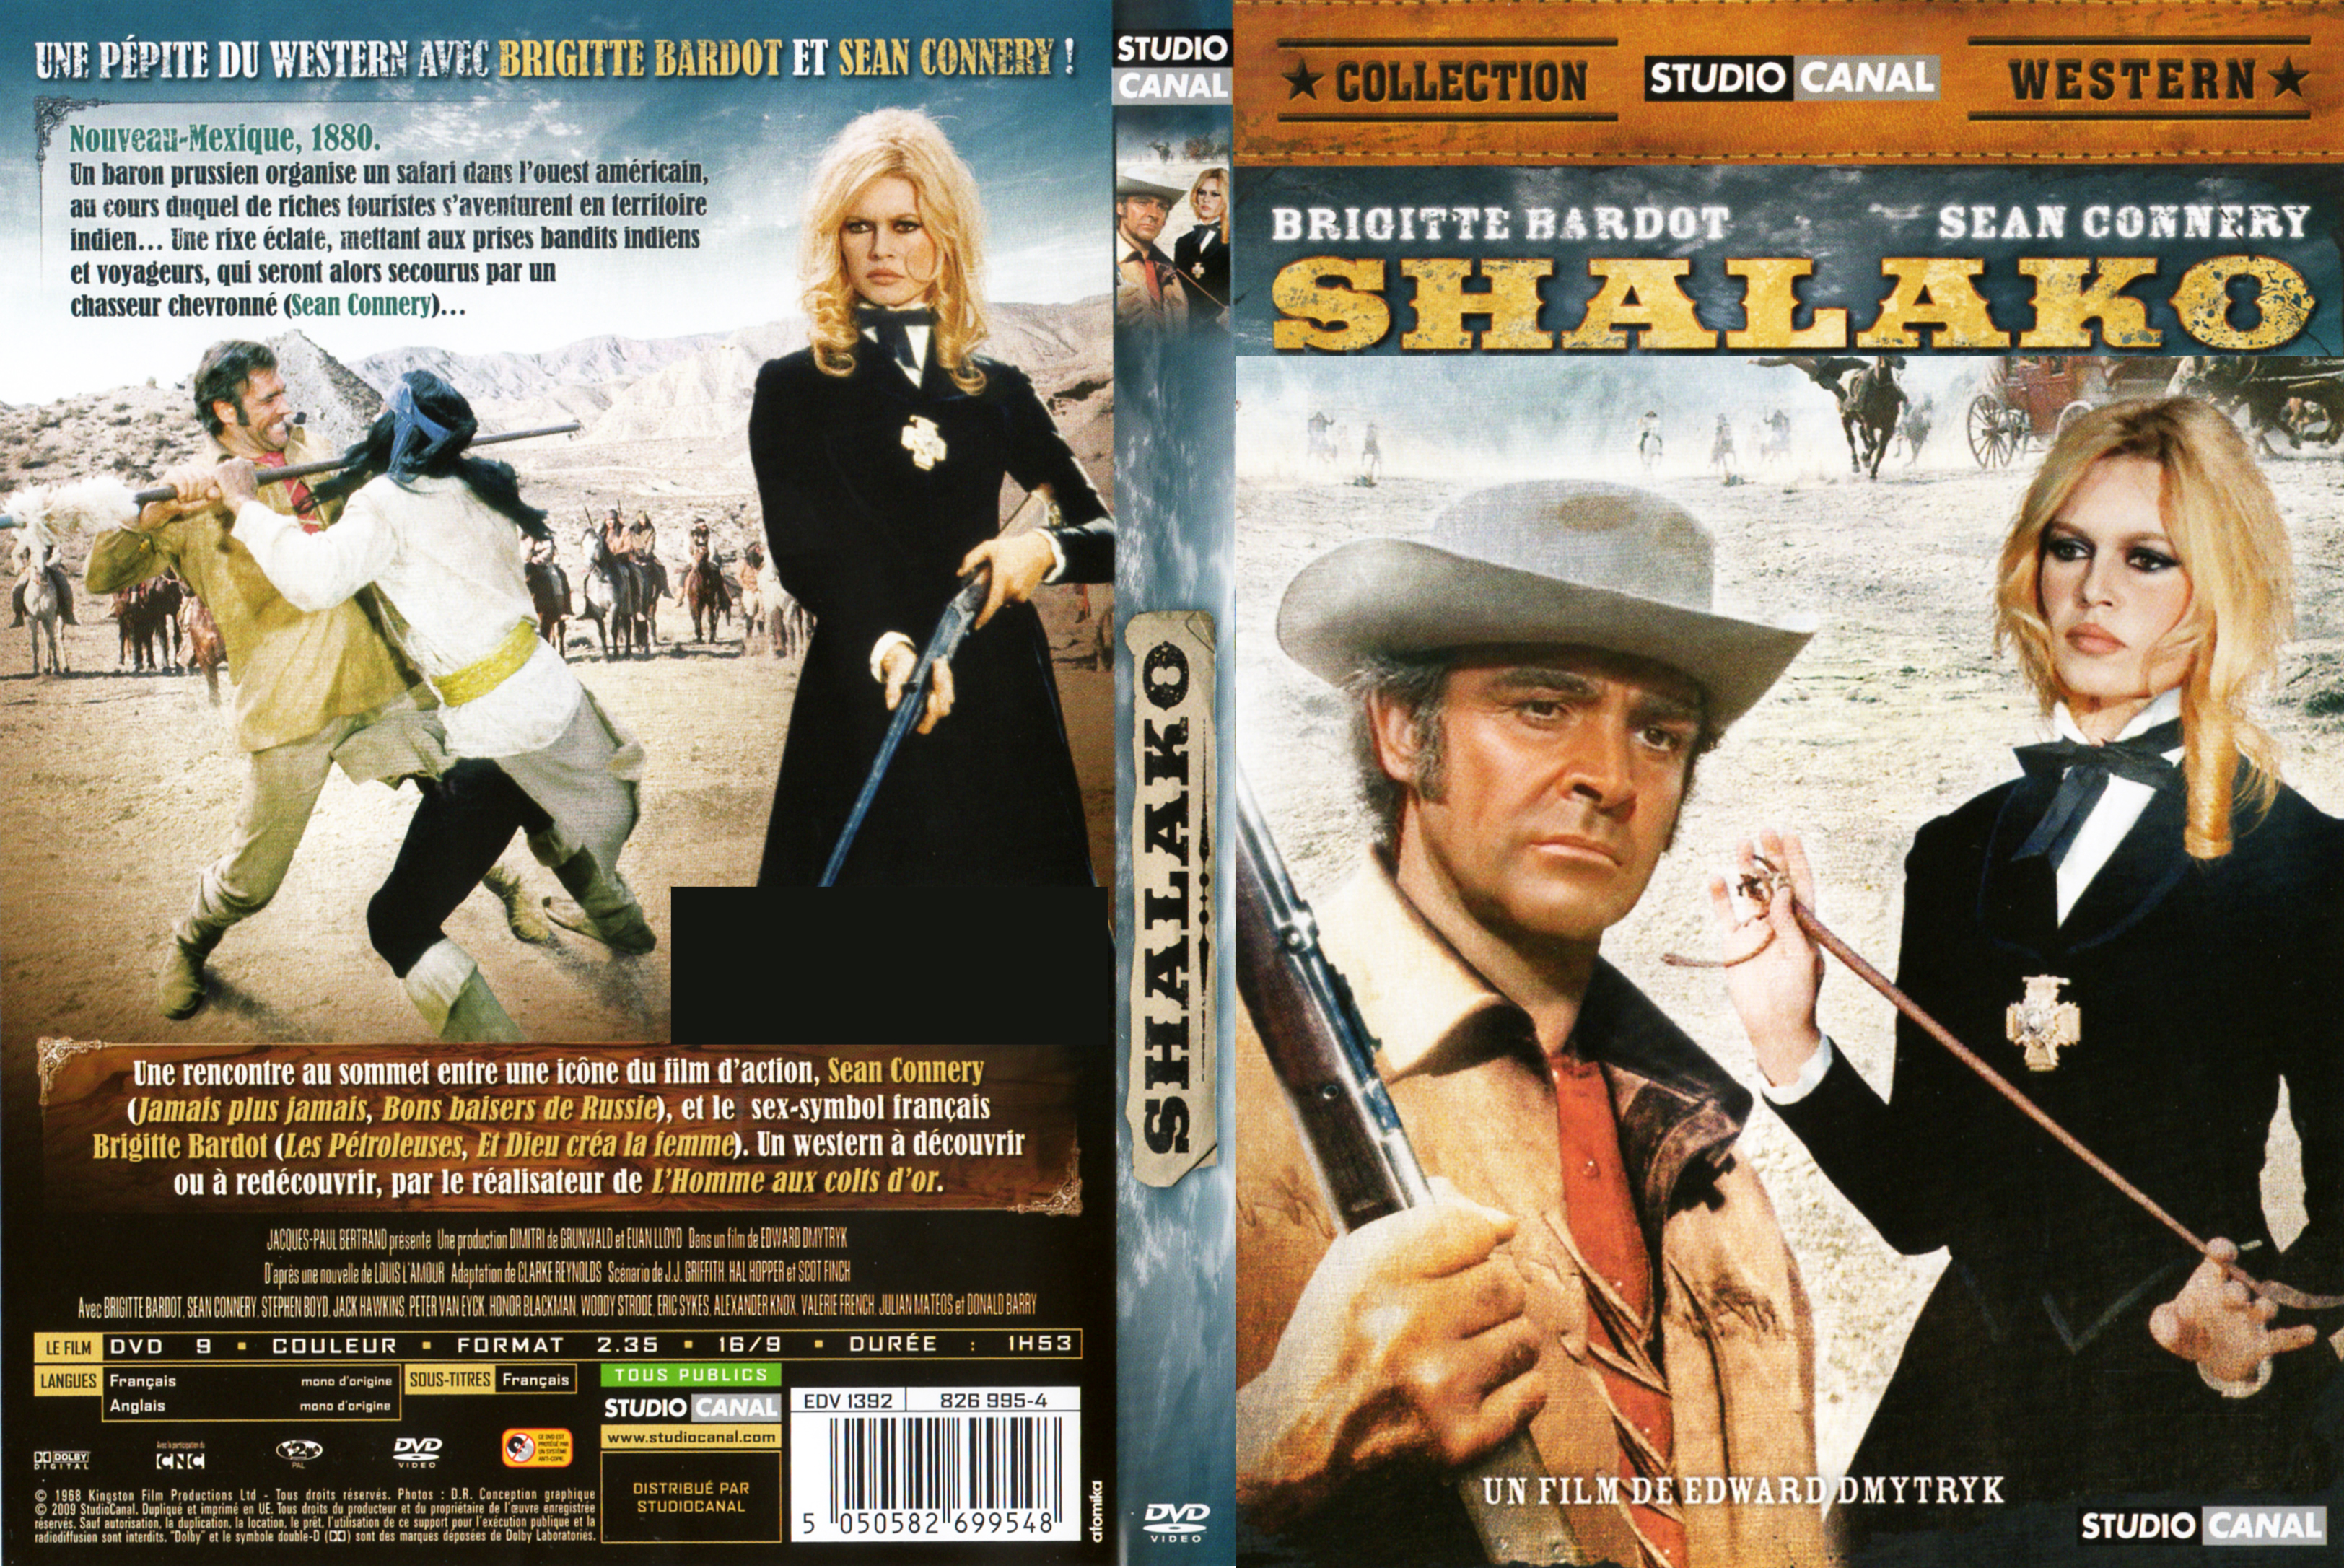 Jaquette DVD Shalako